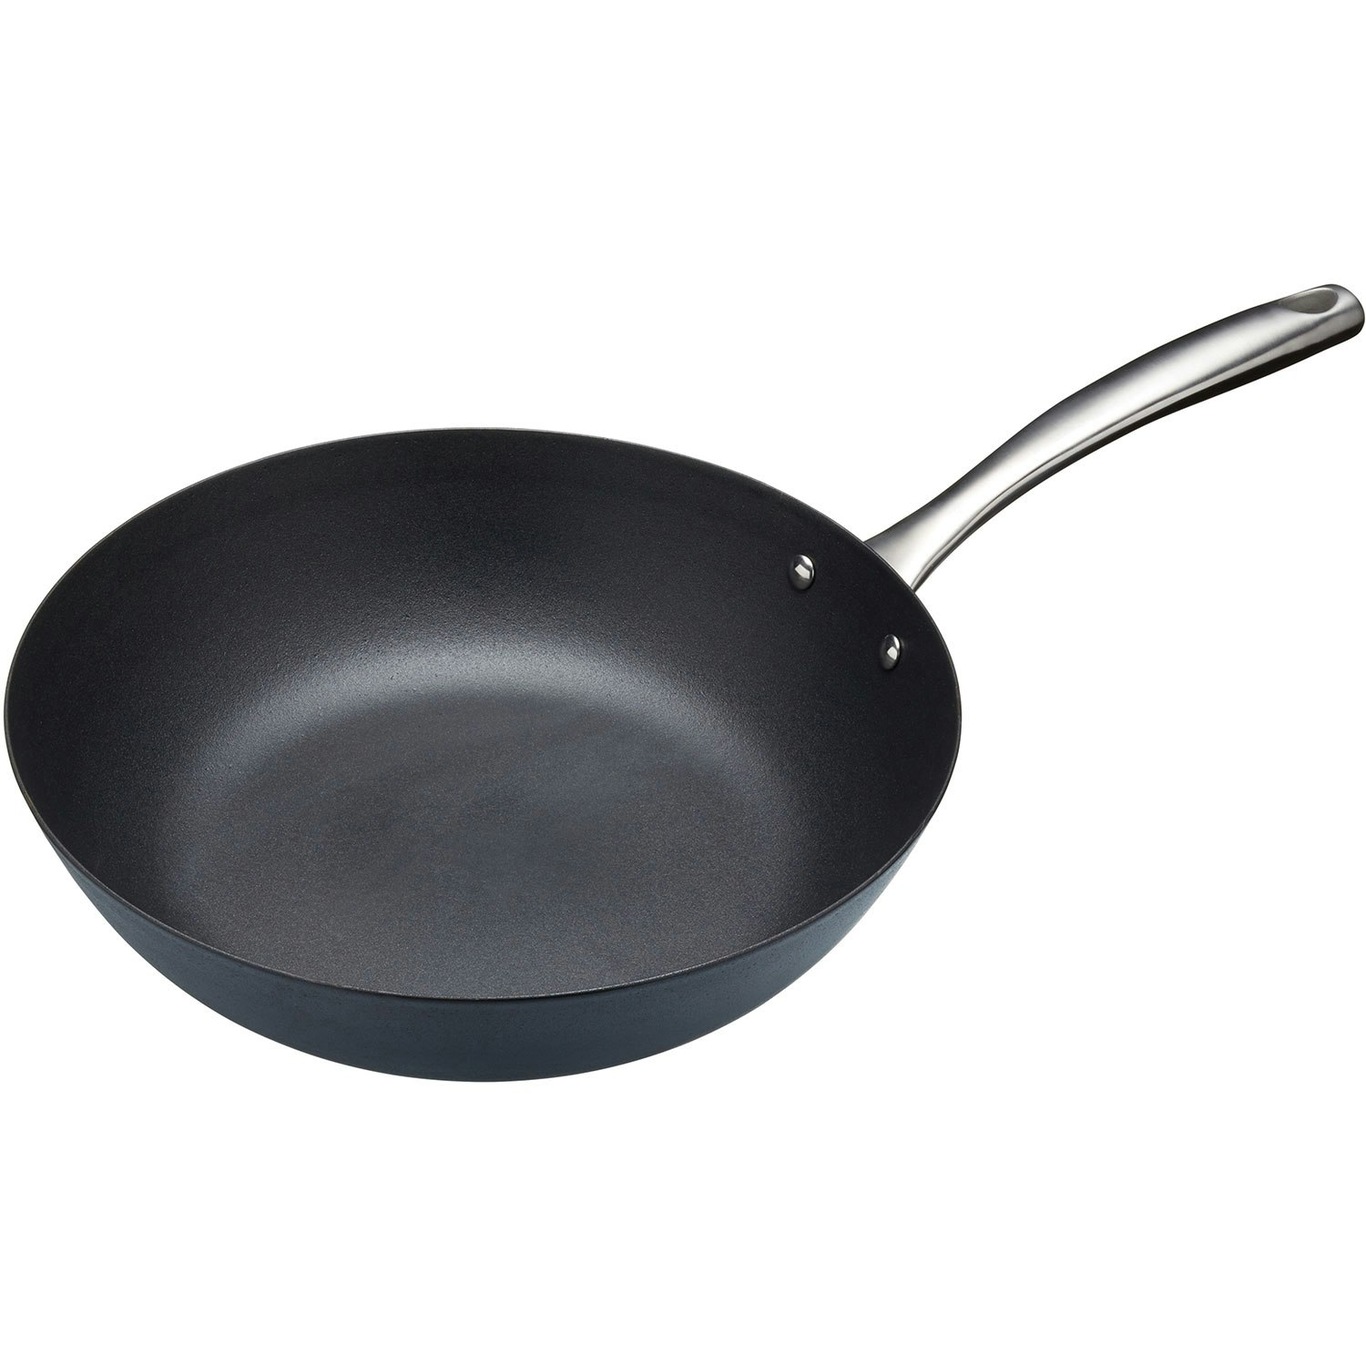 https://royaldesign.com/image/2/kitchen-craft-masterclass-induction-ready-non-stick-wok-20cm-0?w=800&quality=80